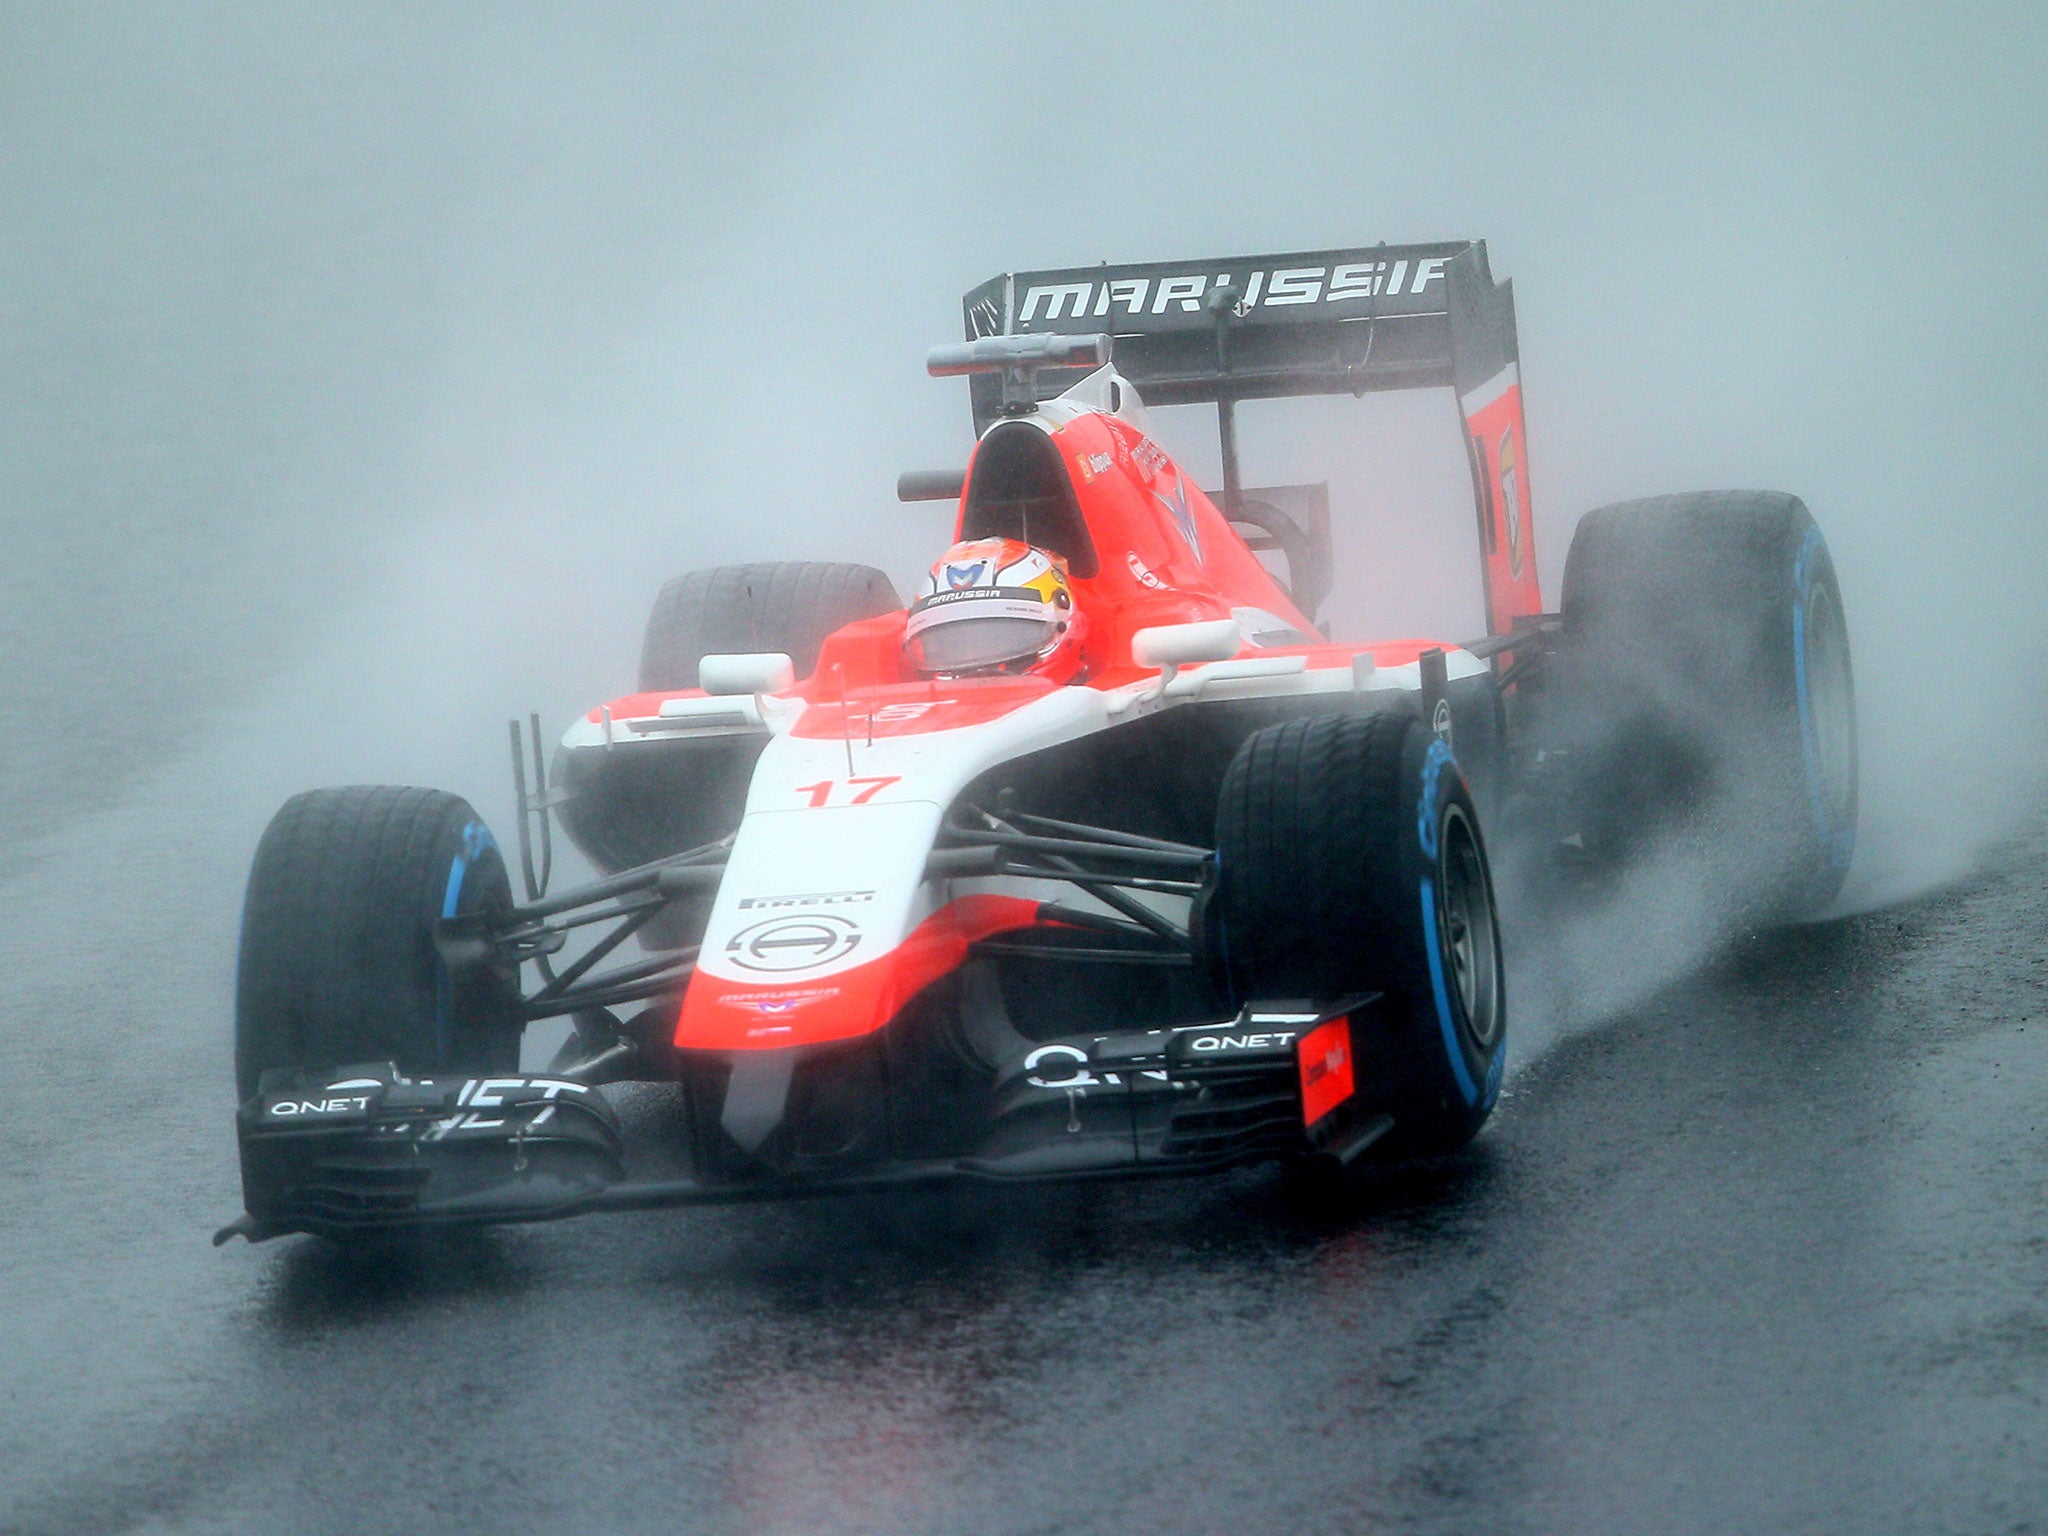 Jules Bianchi drives through the rain at the Japanese Grand Prix